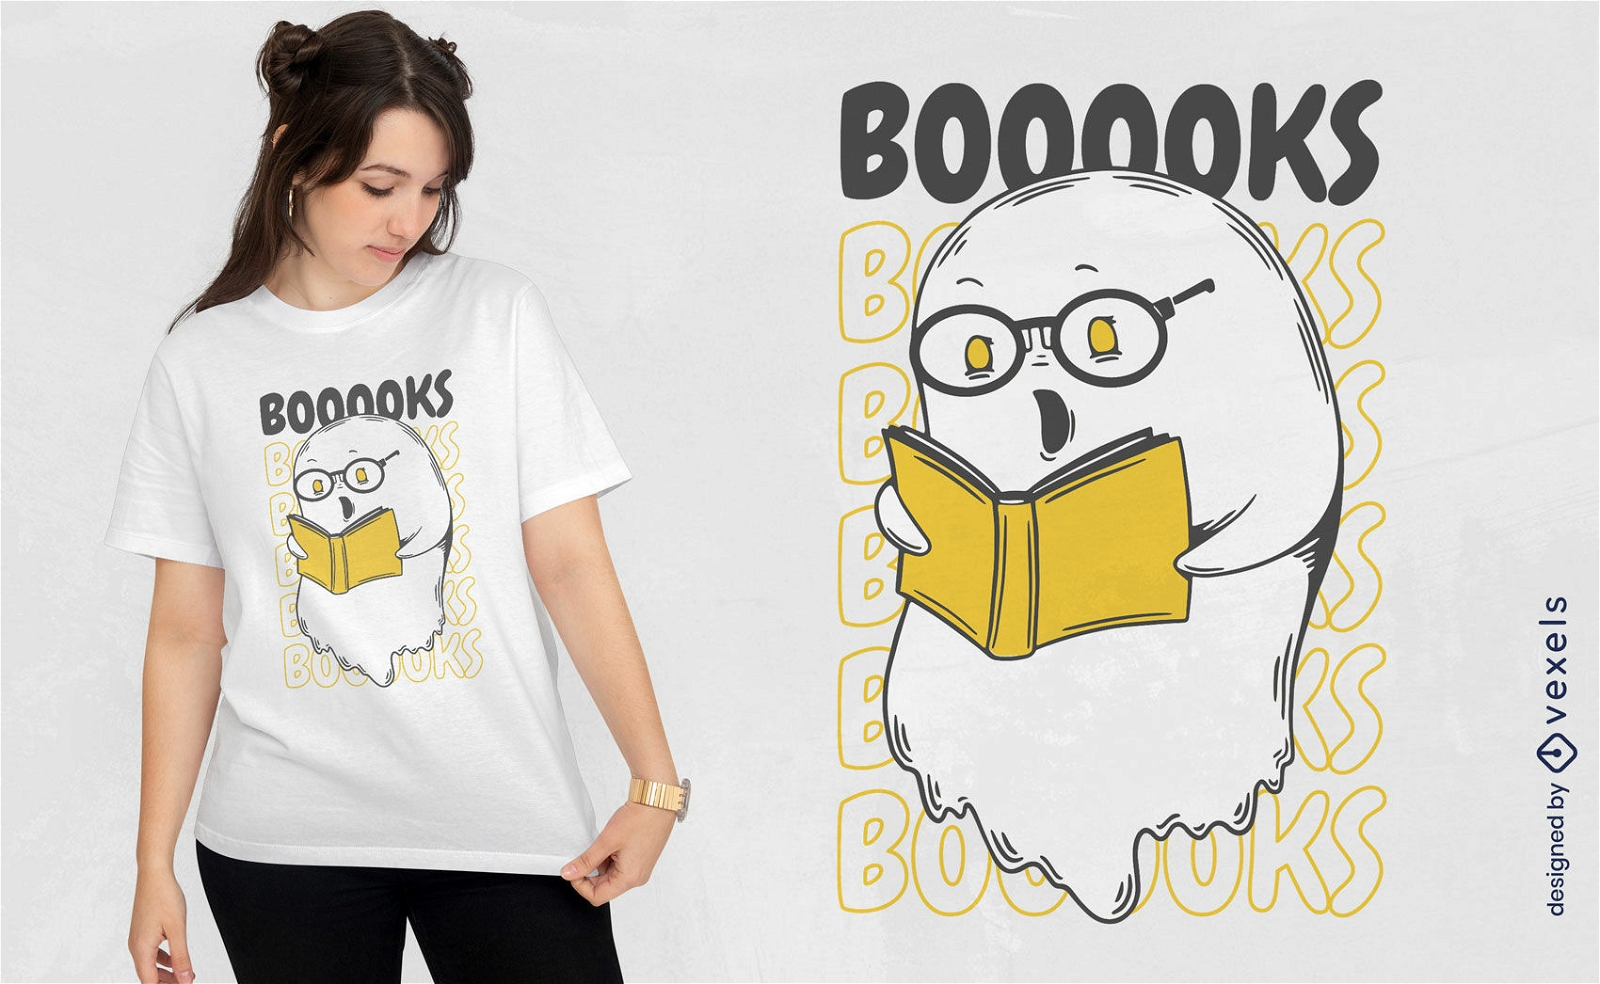 Ghost reading books t-shirt design